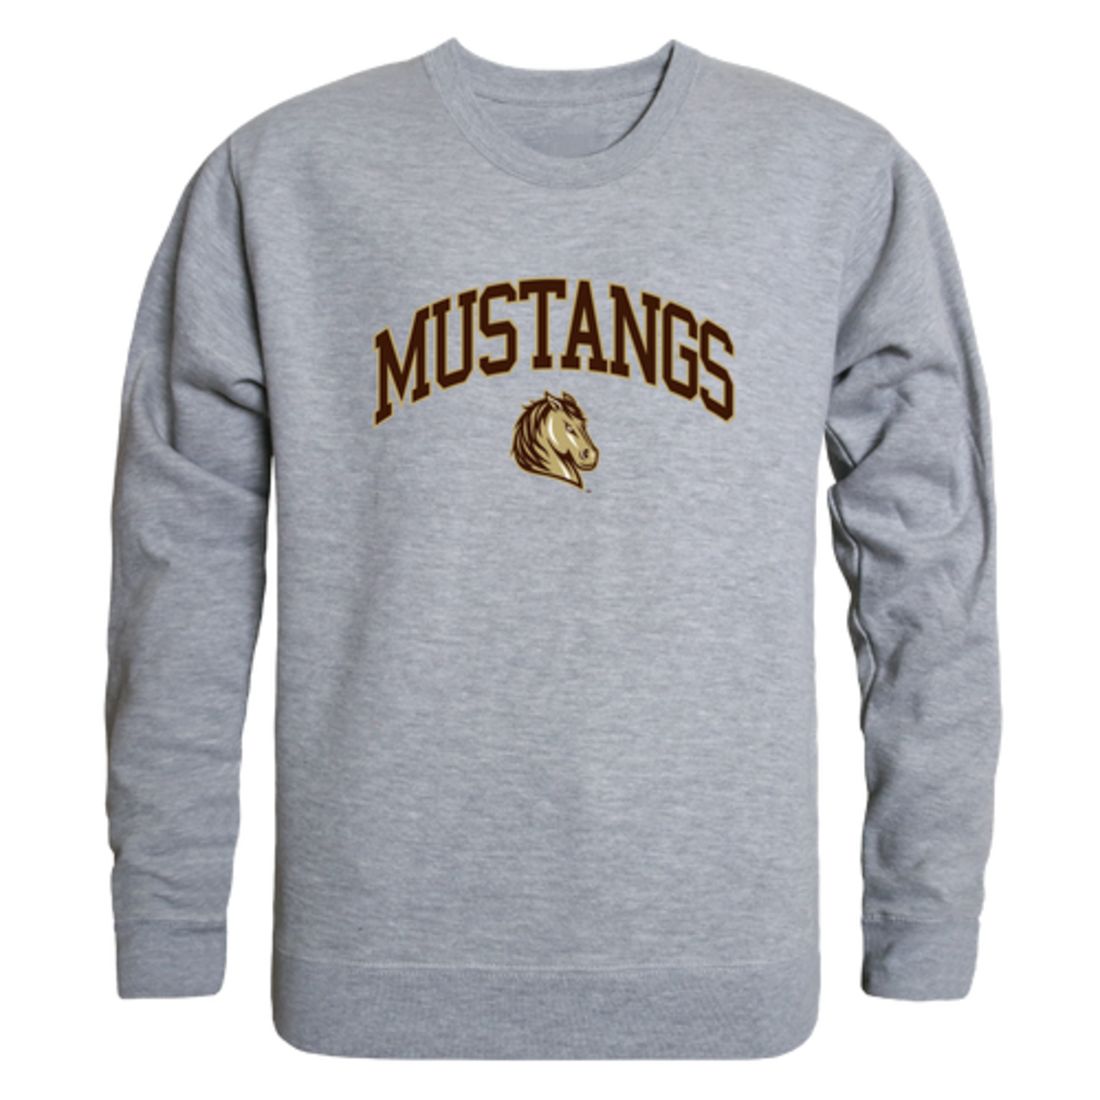 Southwest Minnesota State University Mustangs Campus Crewneck Sweatshirt